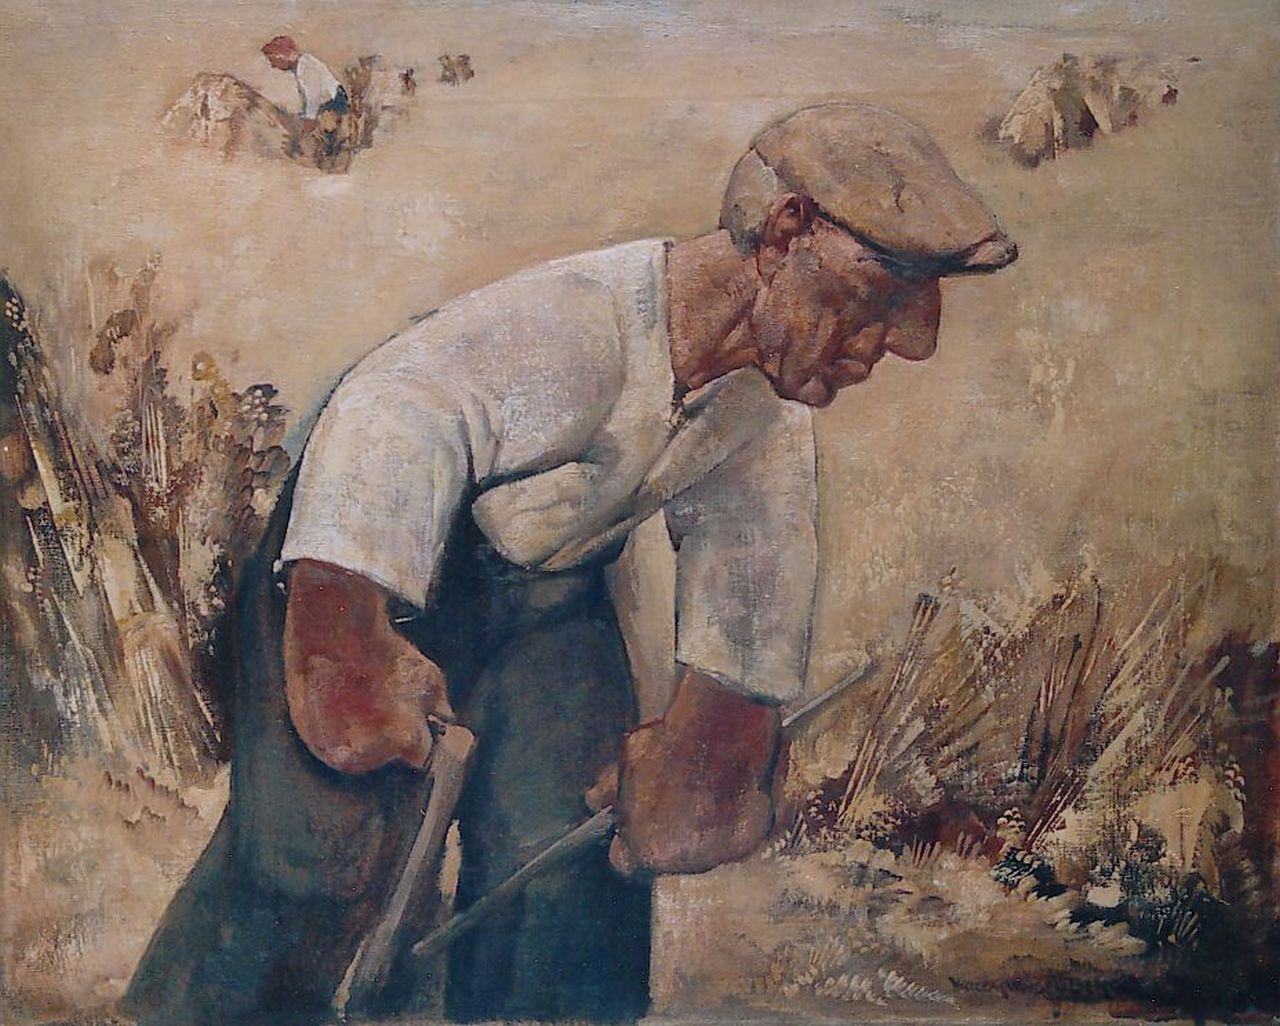 Berg W.H. van den | 'Willem' Hendrik van den Berg, Harvesting farmer, oil on canvas 40.7 x 50.6 cm, signed l.r.